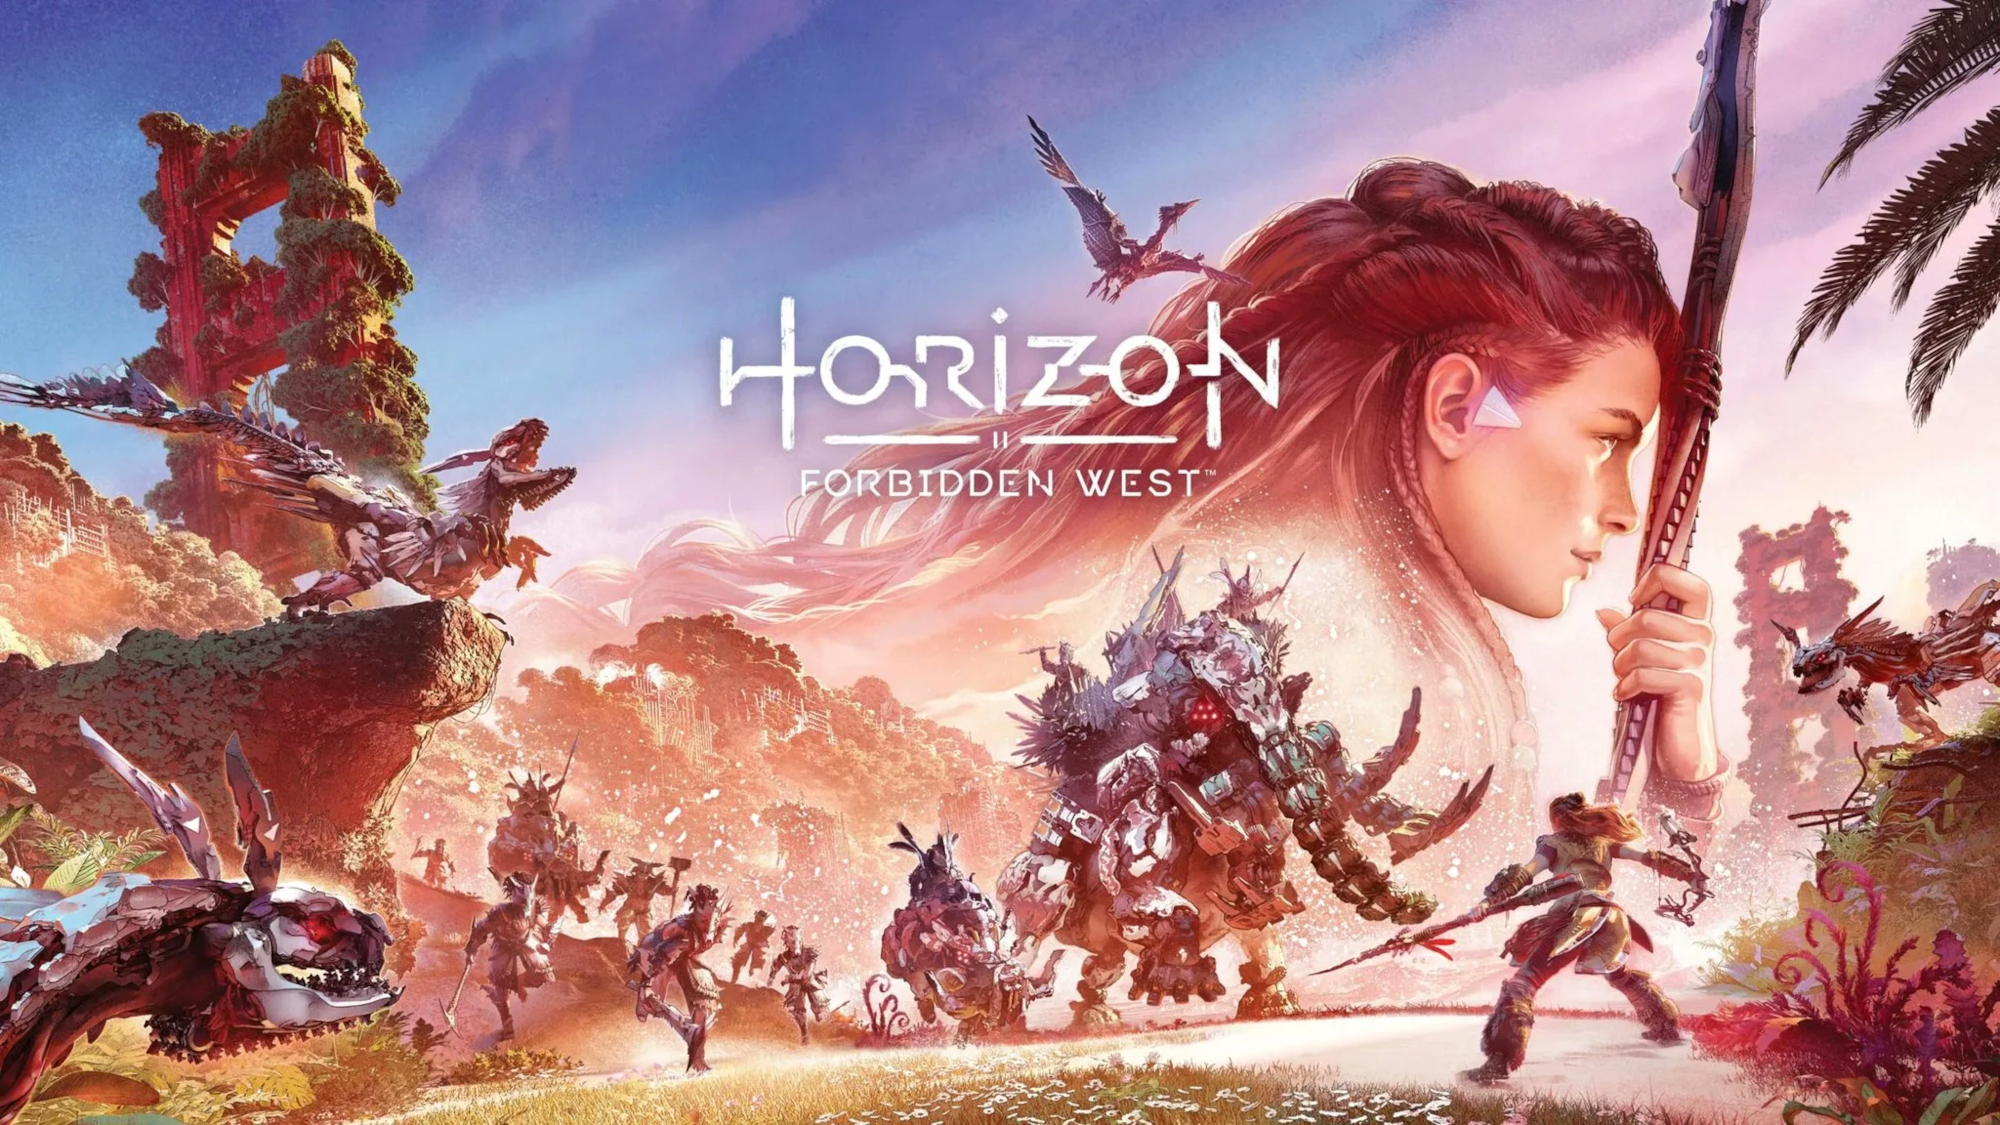 Horizon Forbidden West review: A crowd-pleasing sequel | Tom's Guide